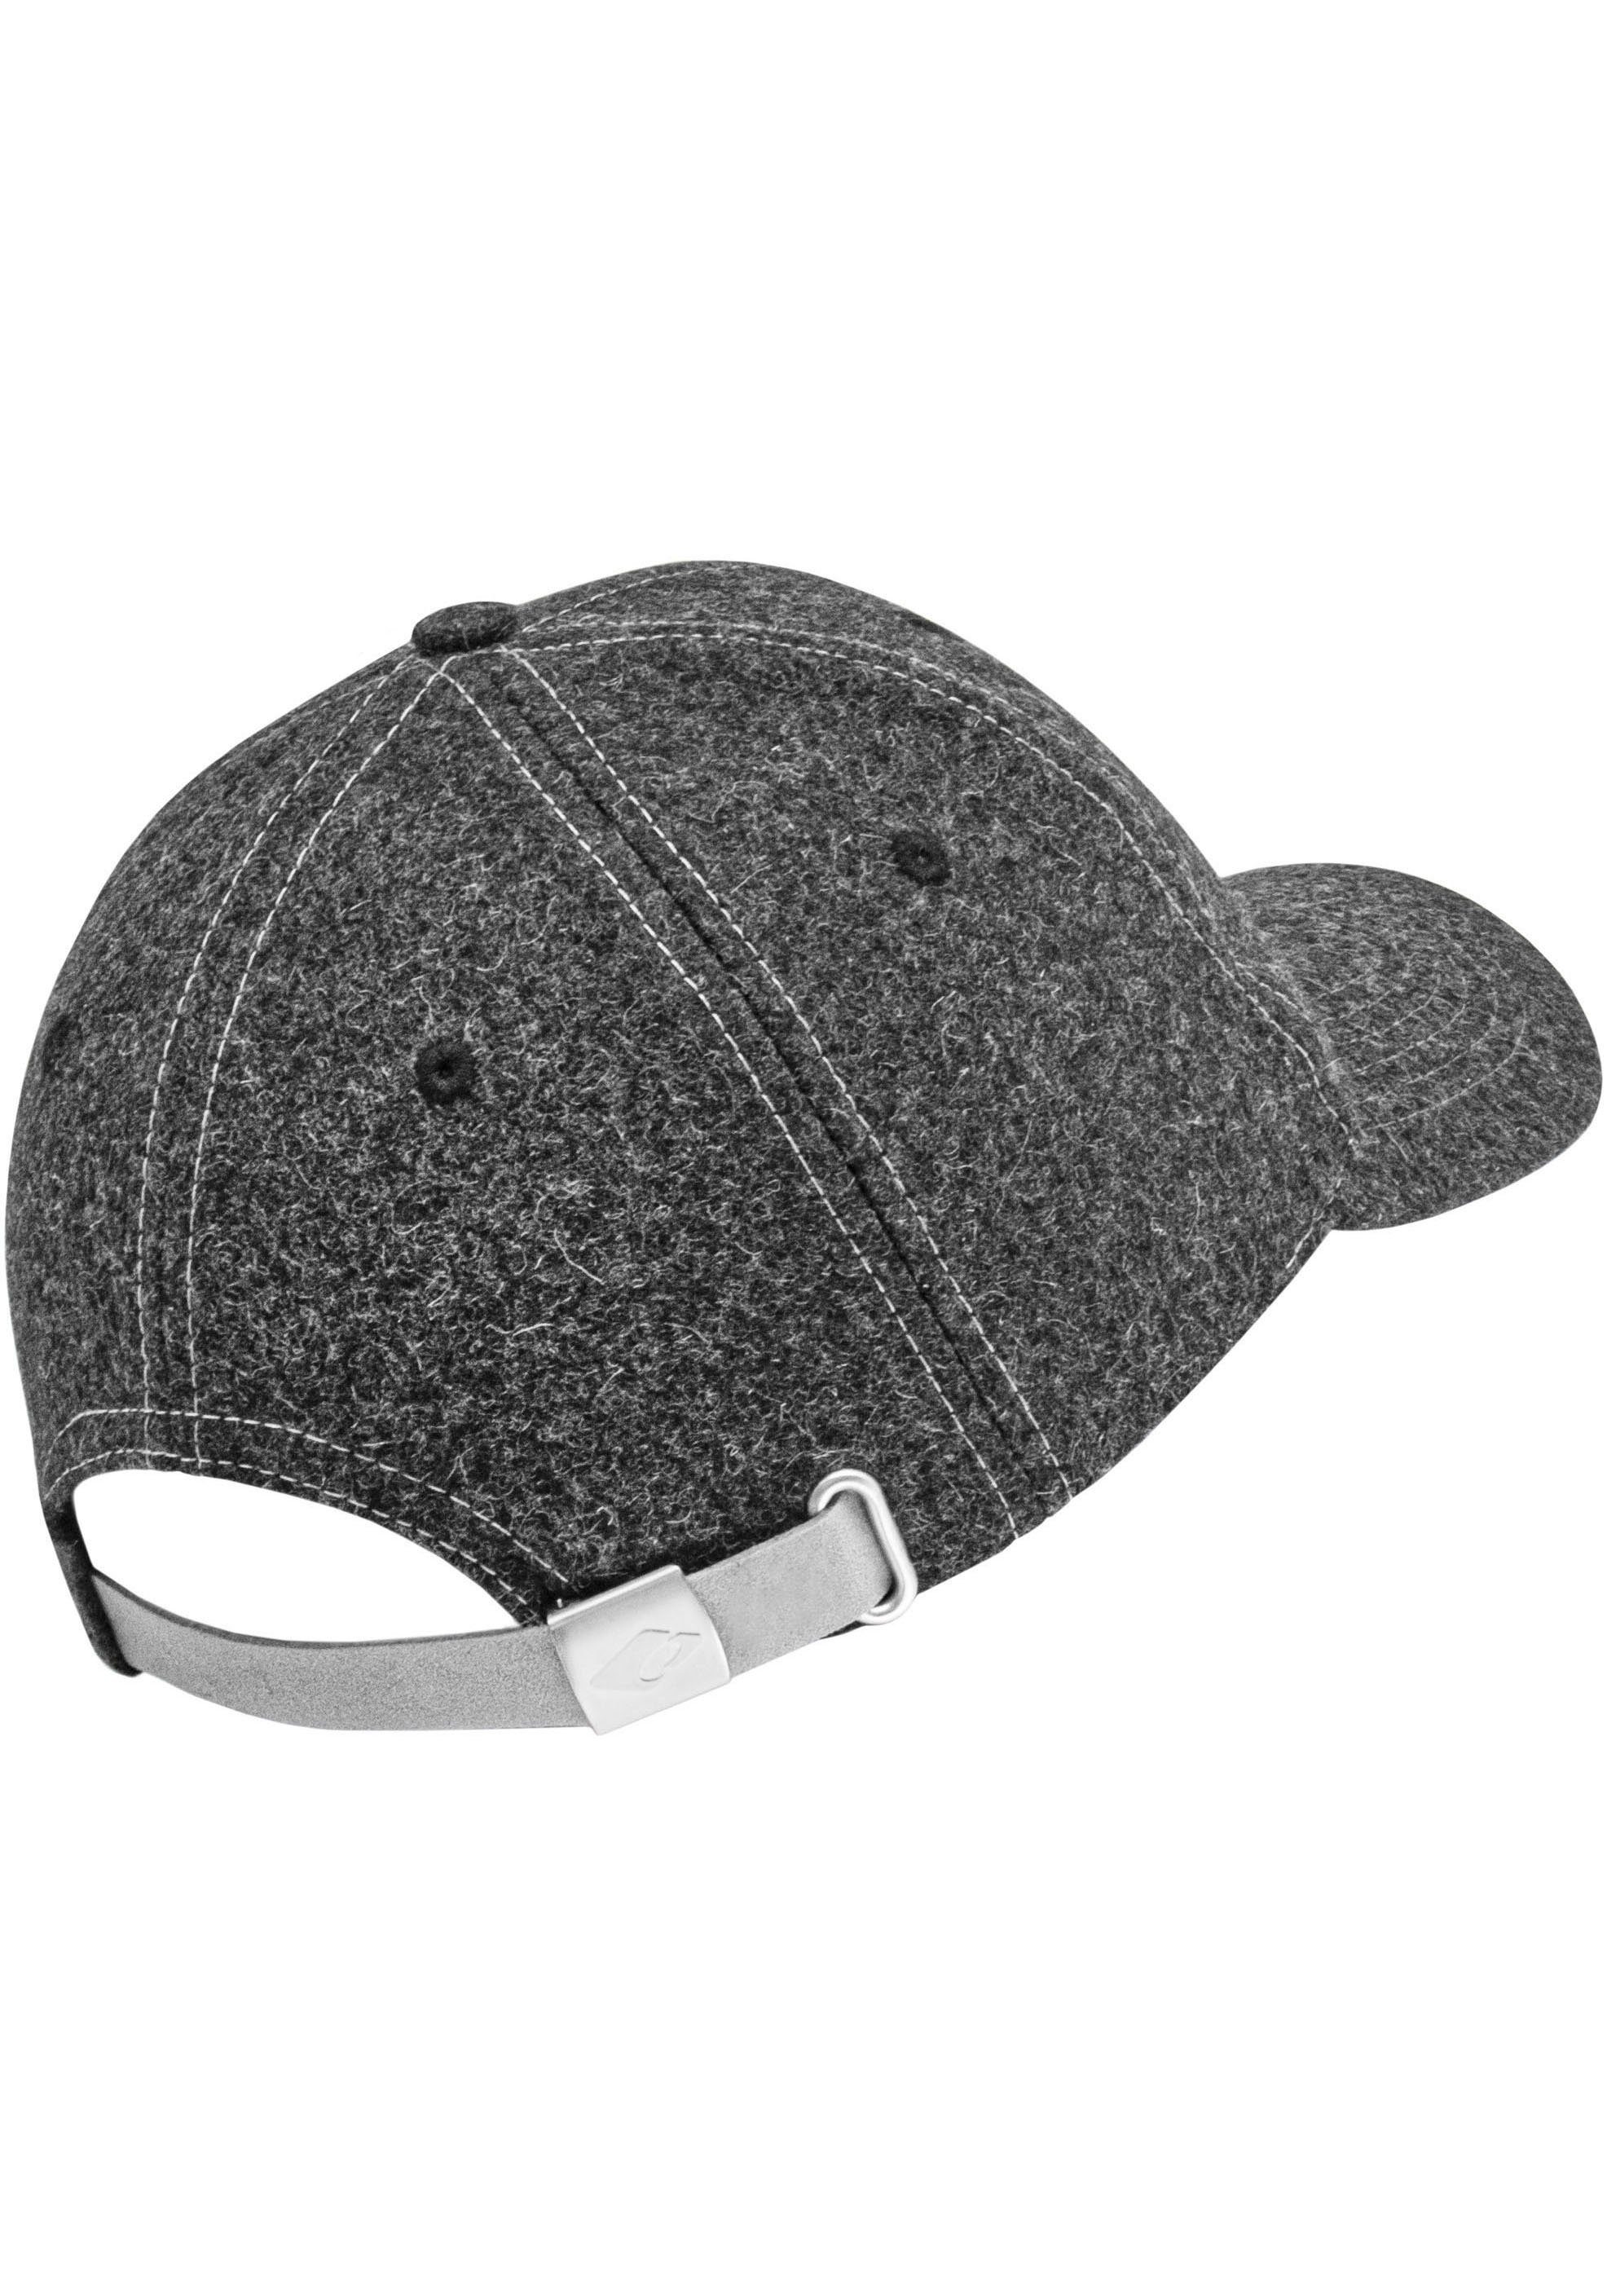 chillouts Baseball Cap Mateo dark Wasserabweisendes grey Material Hat